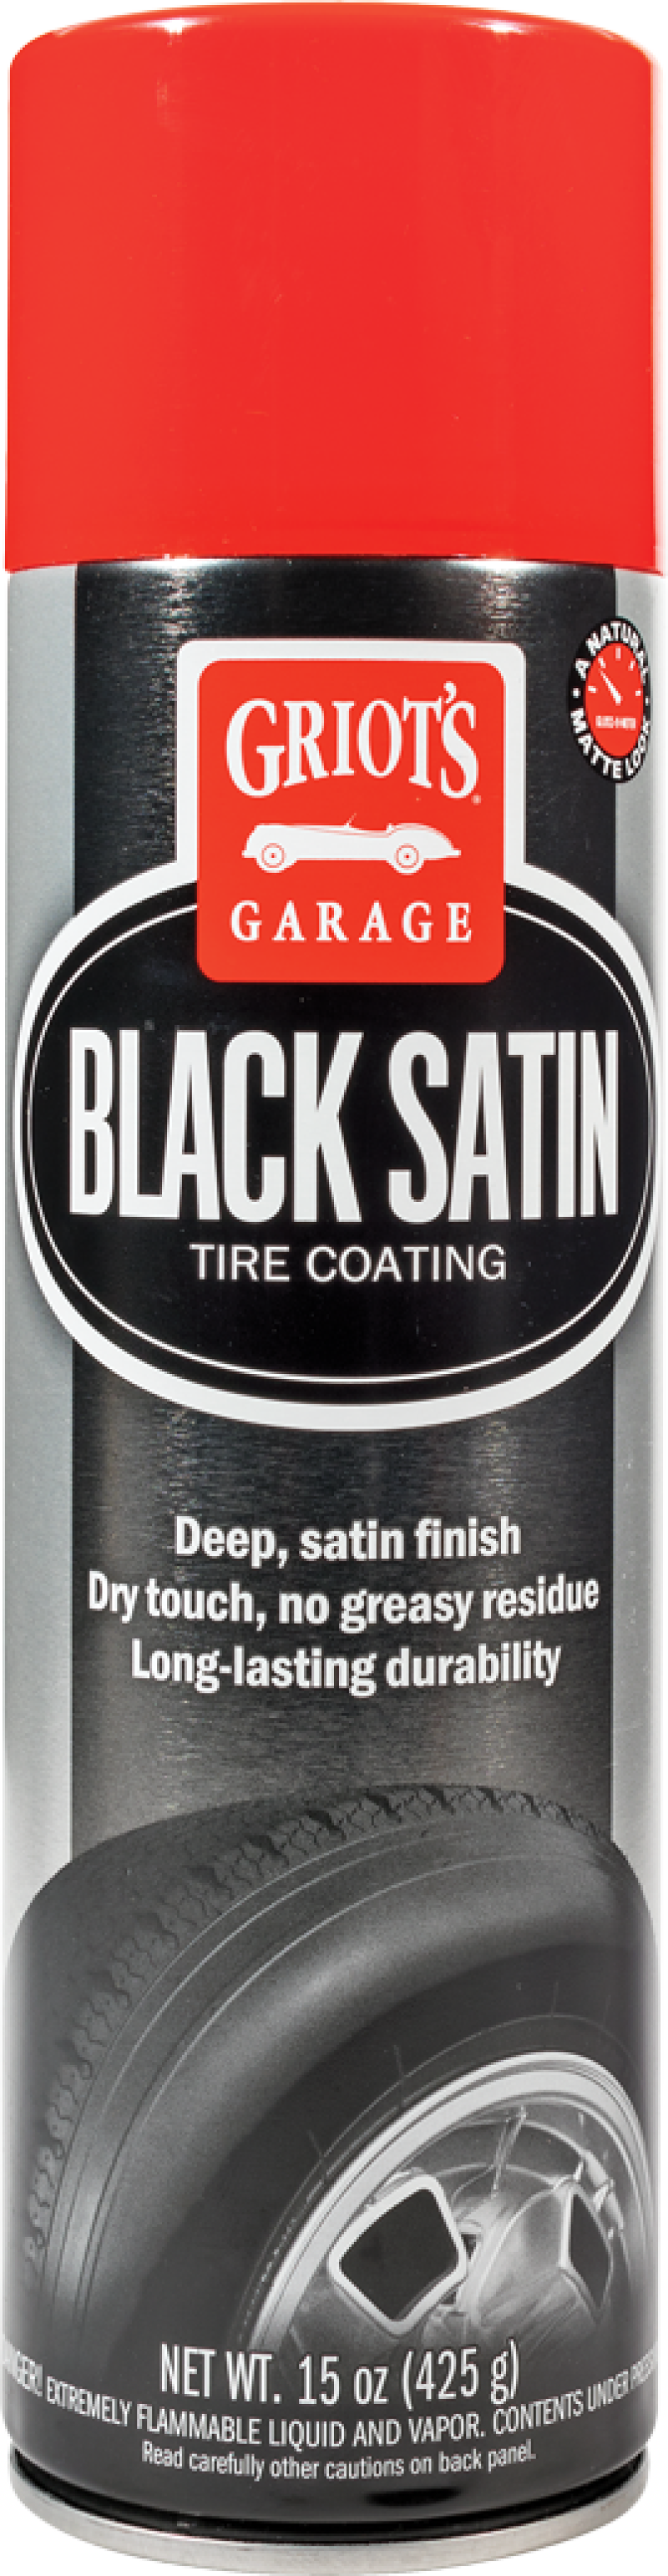 Griots Garage Black Satin Tire Coating - 15oz